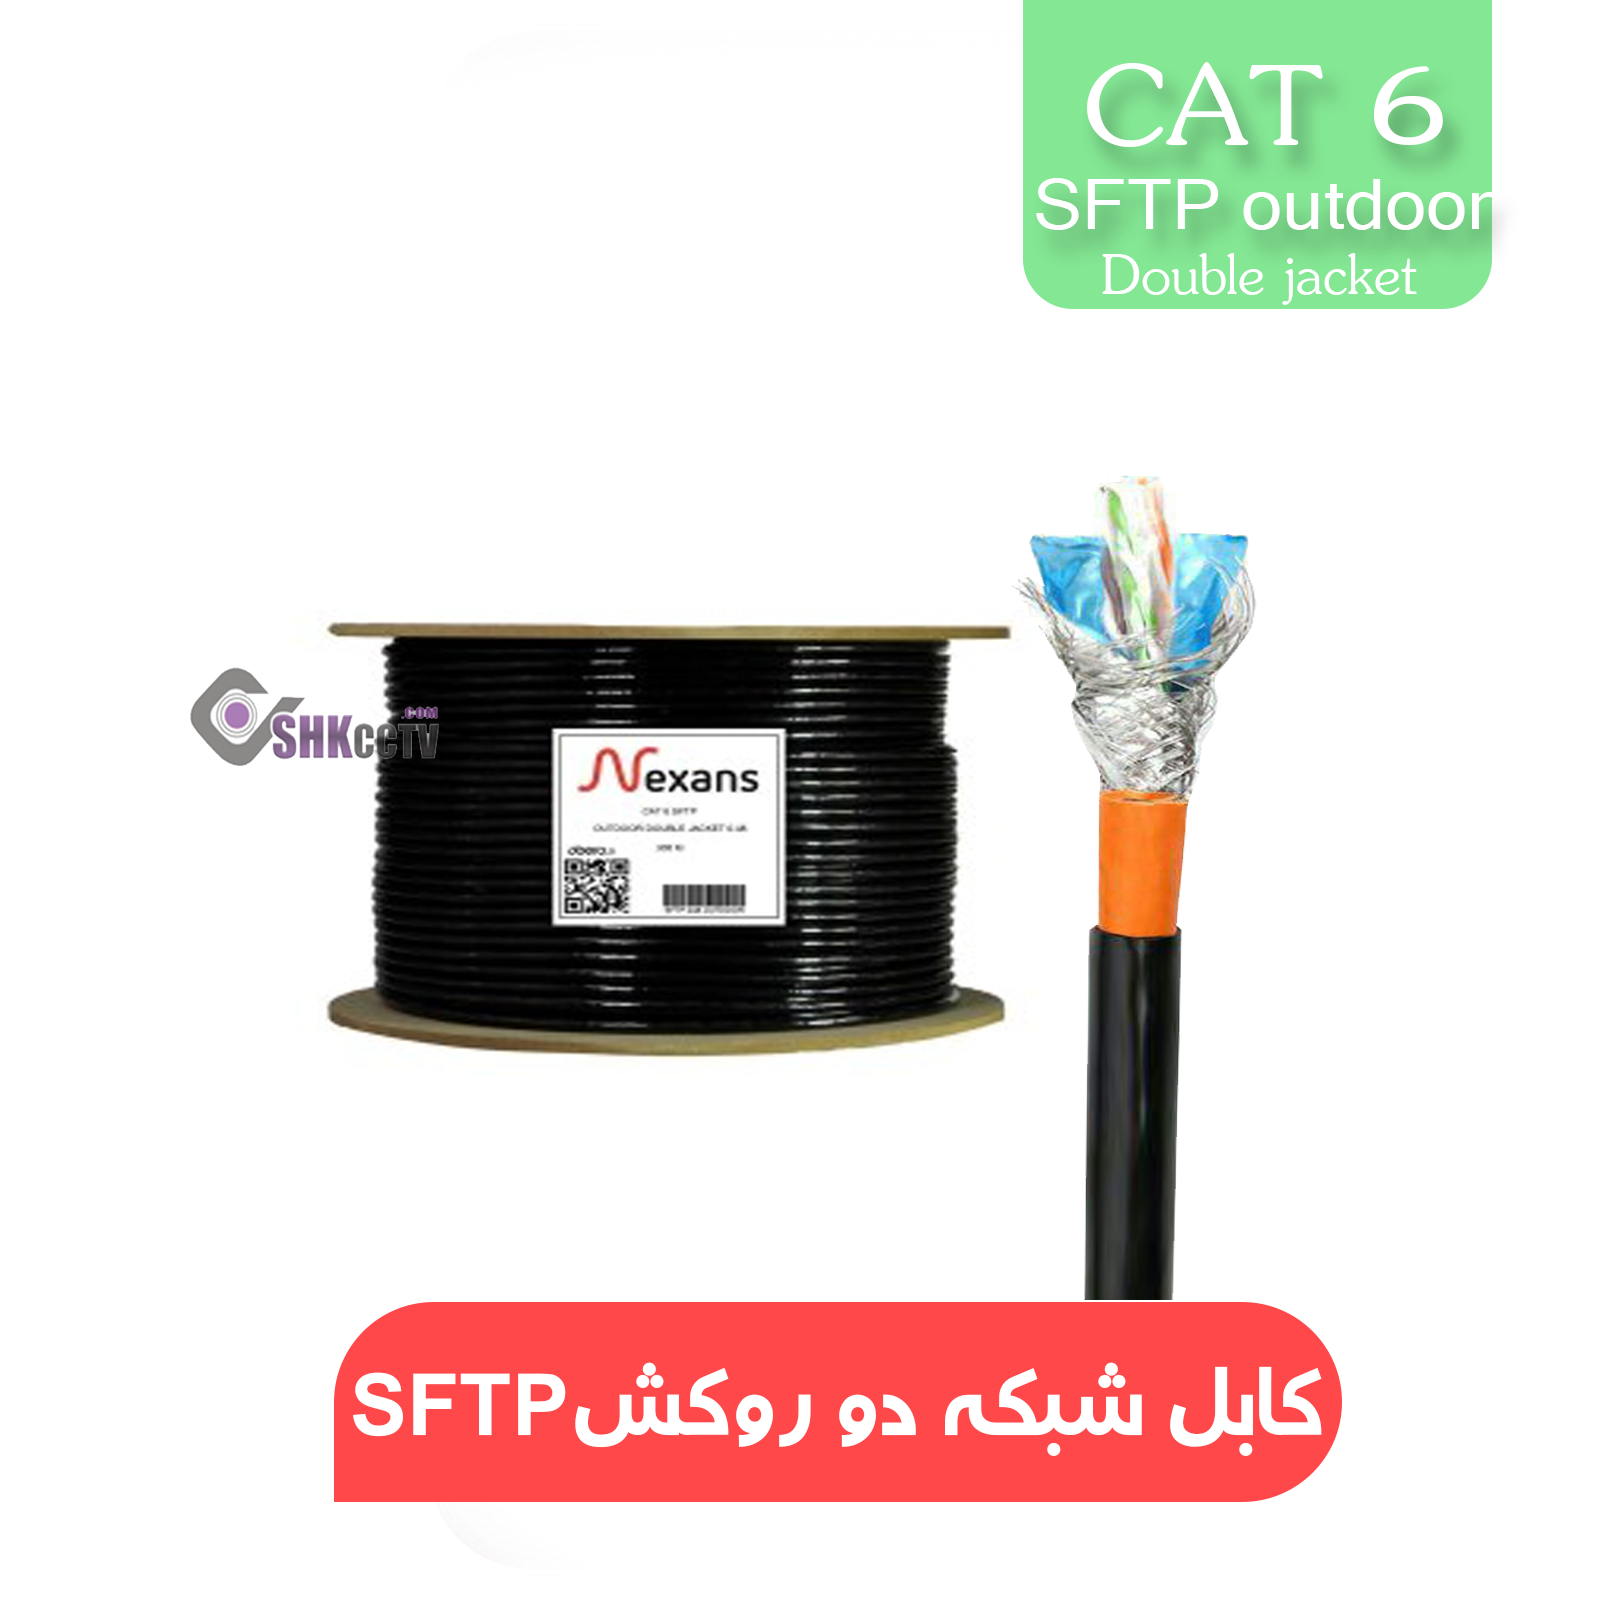 SFTPکابل شبکه دو روکش outdoor cat6